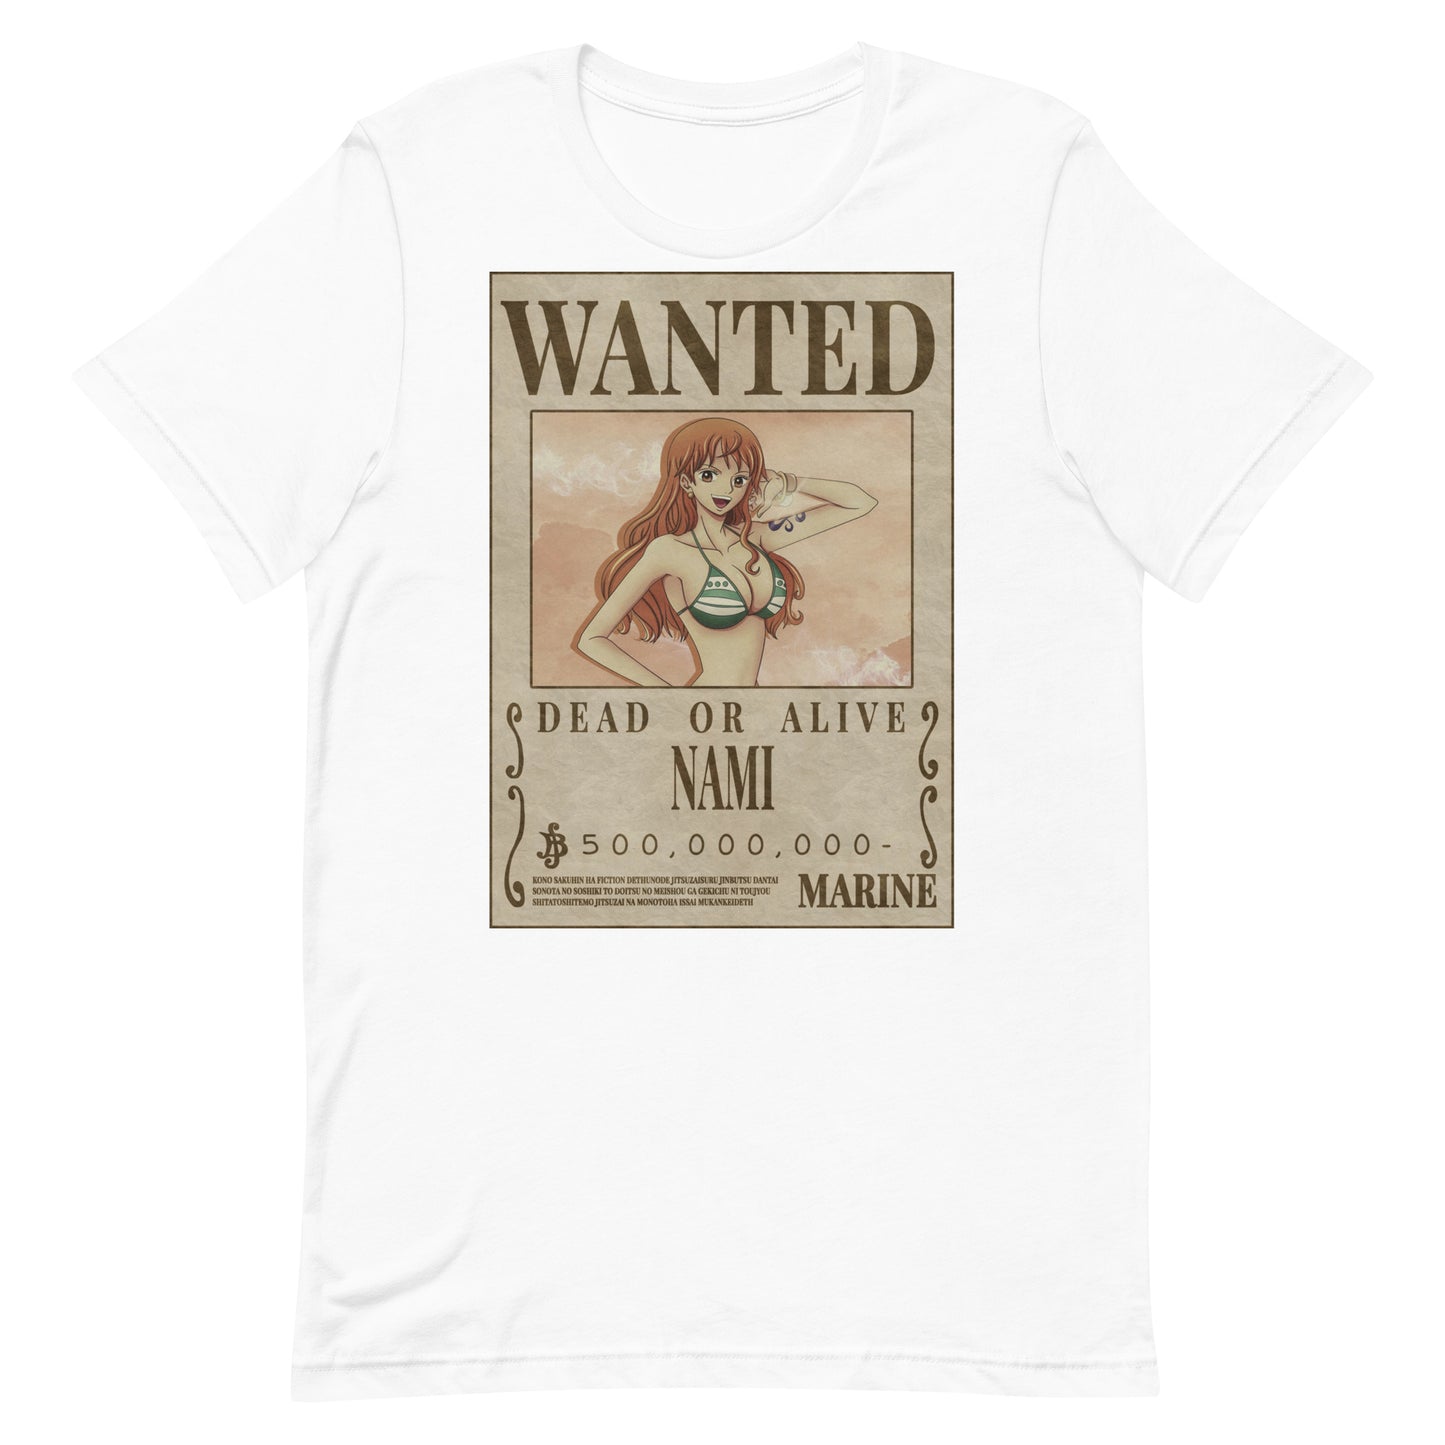 Nami Wanted Poster T Shirt